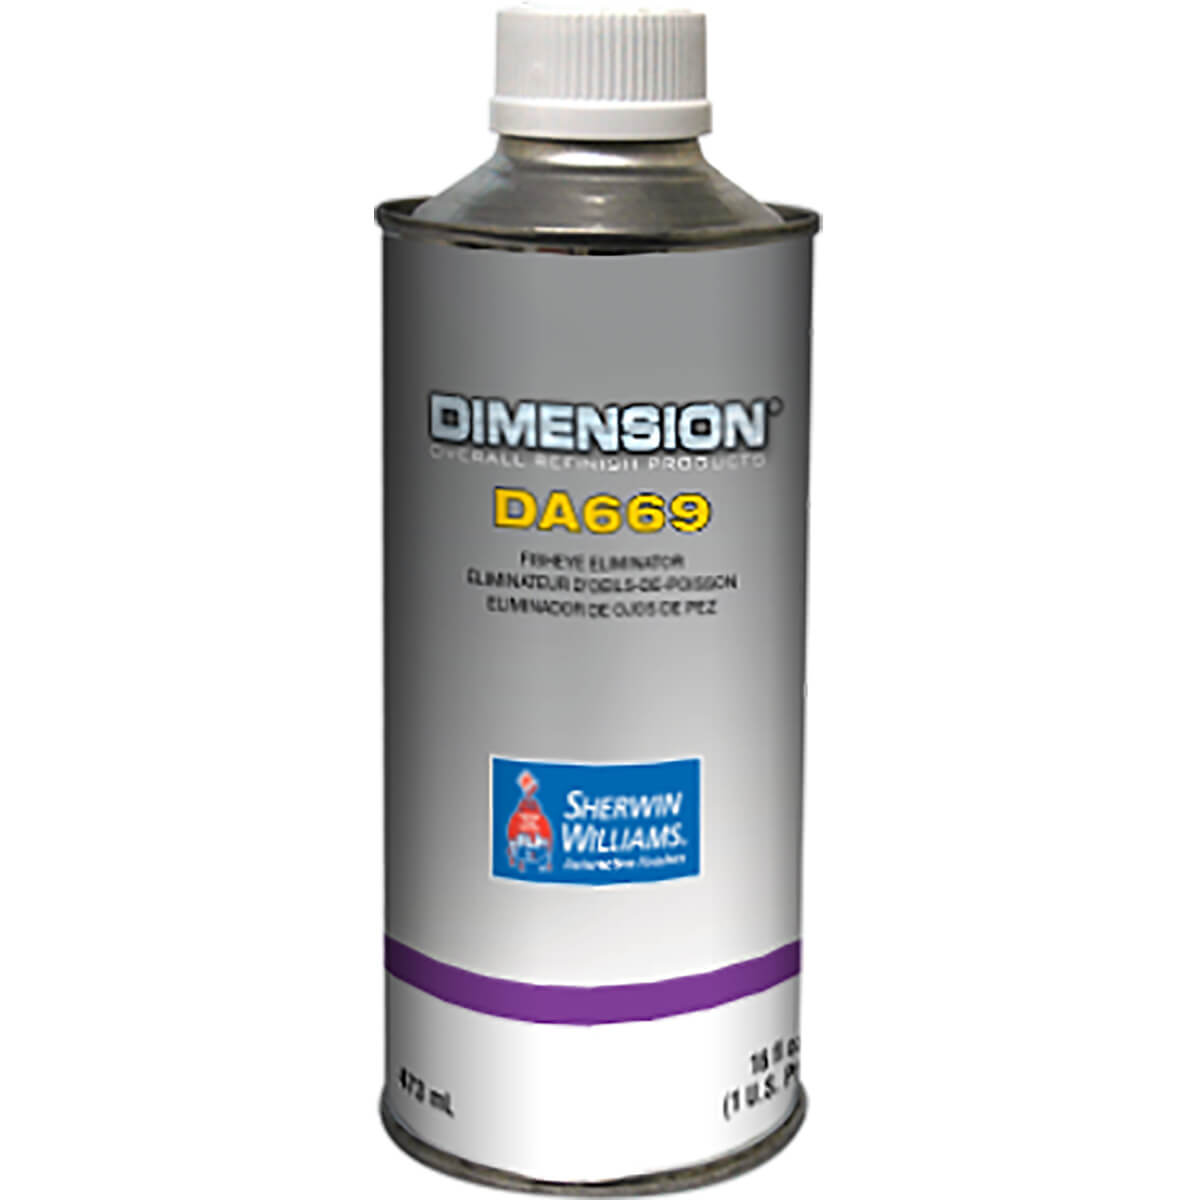 Sherwin-Williams Dimension Fisheye Eliminator - Pint DA669 Product Image